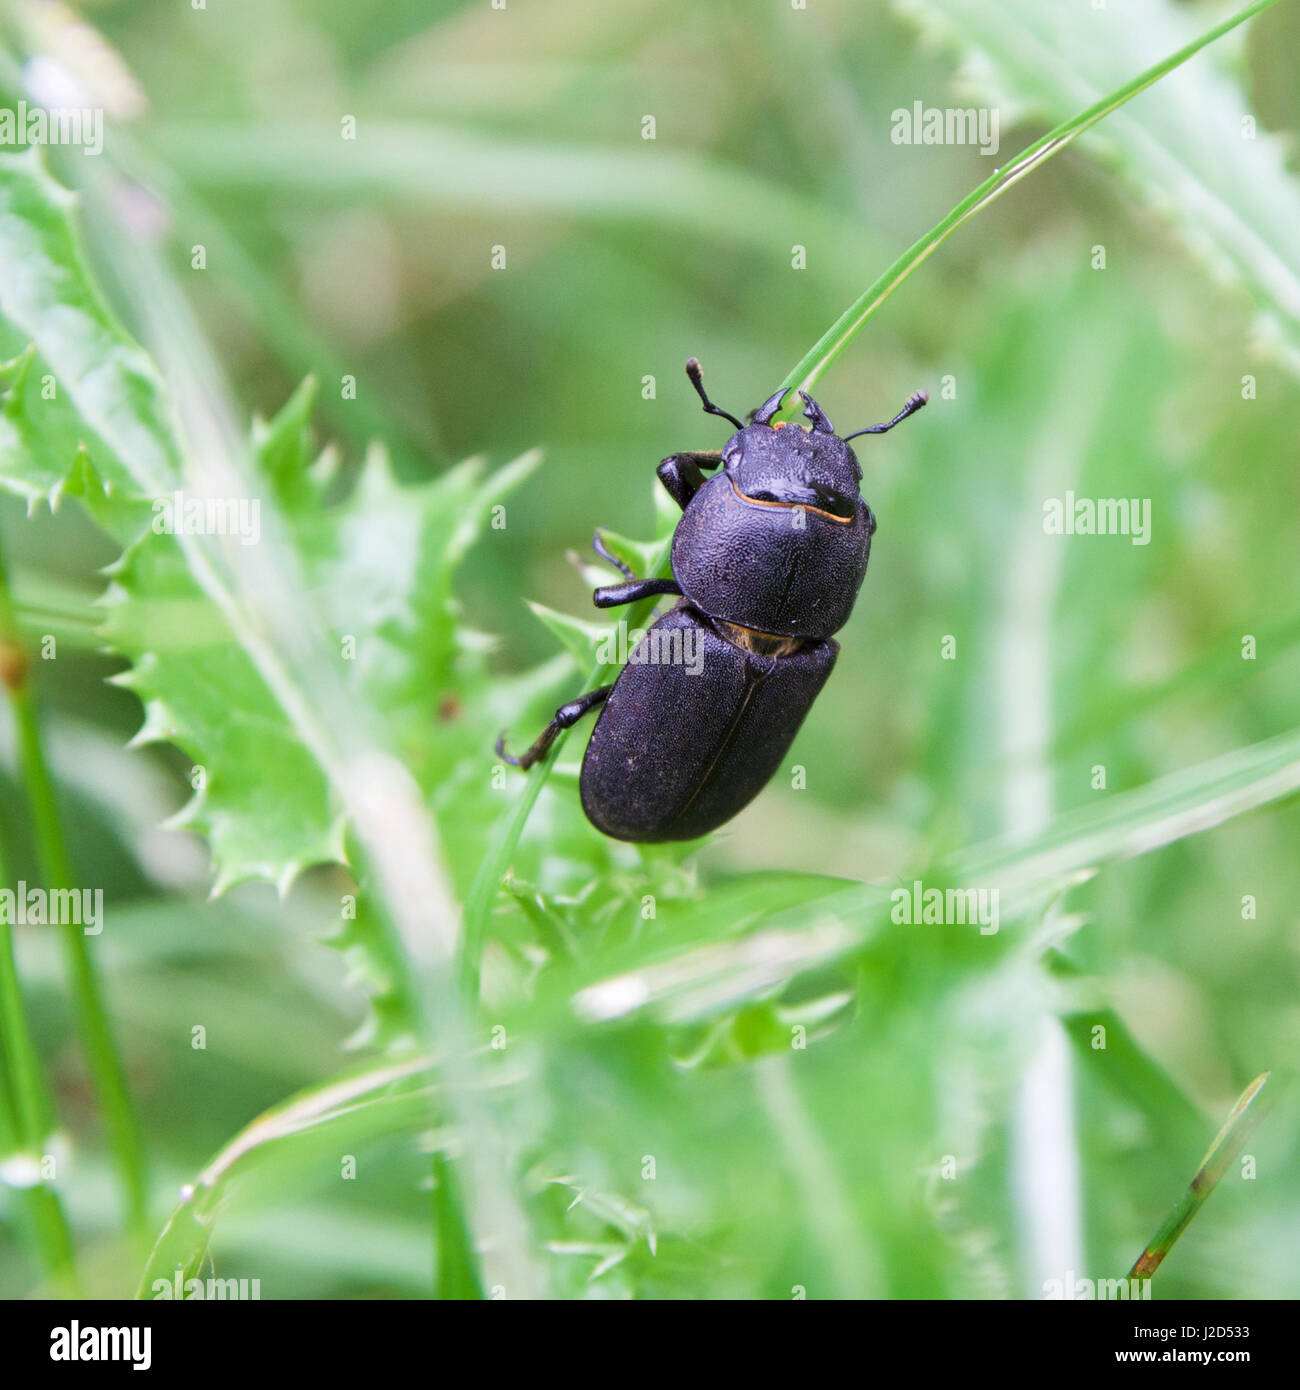 Beetle on grass Stock Photo